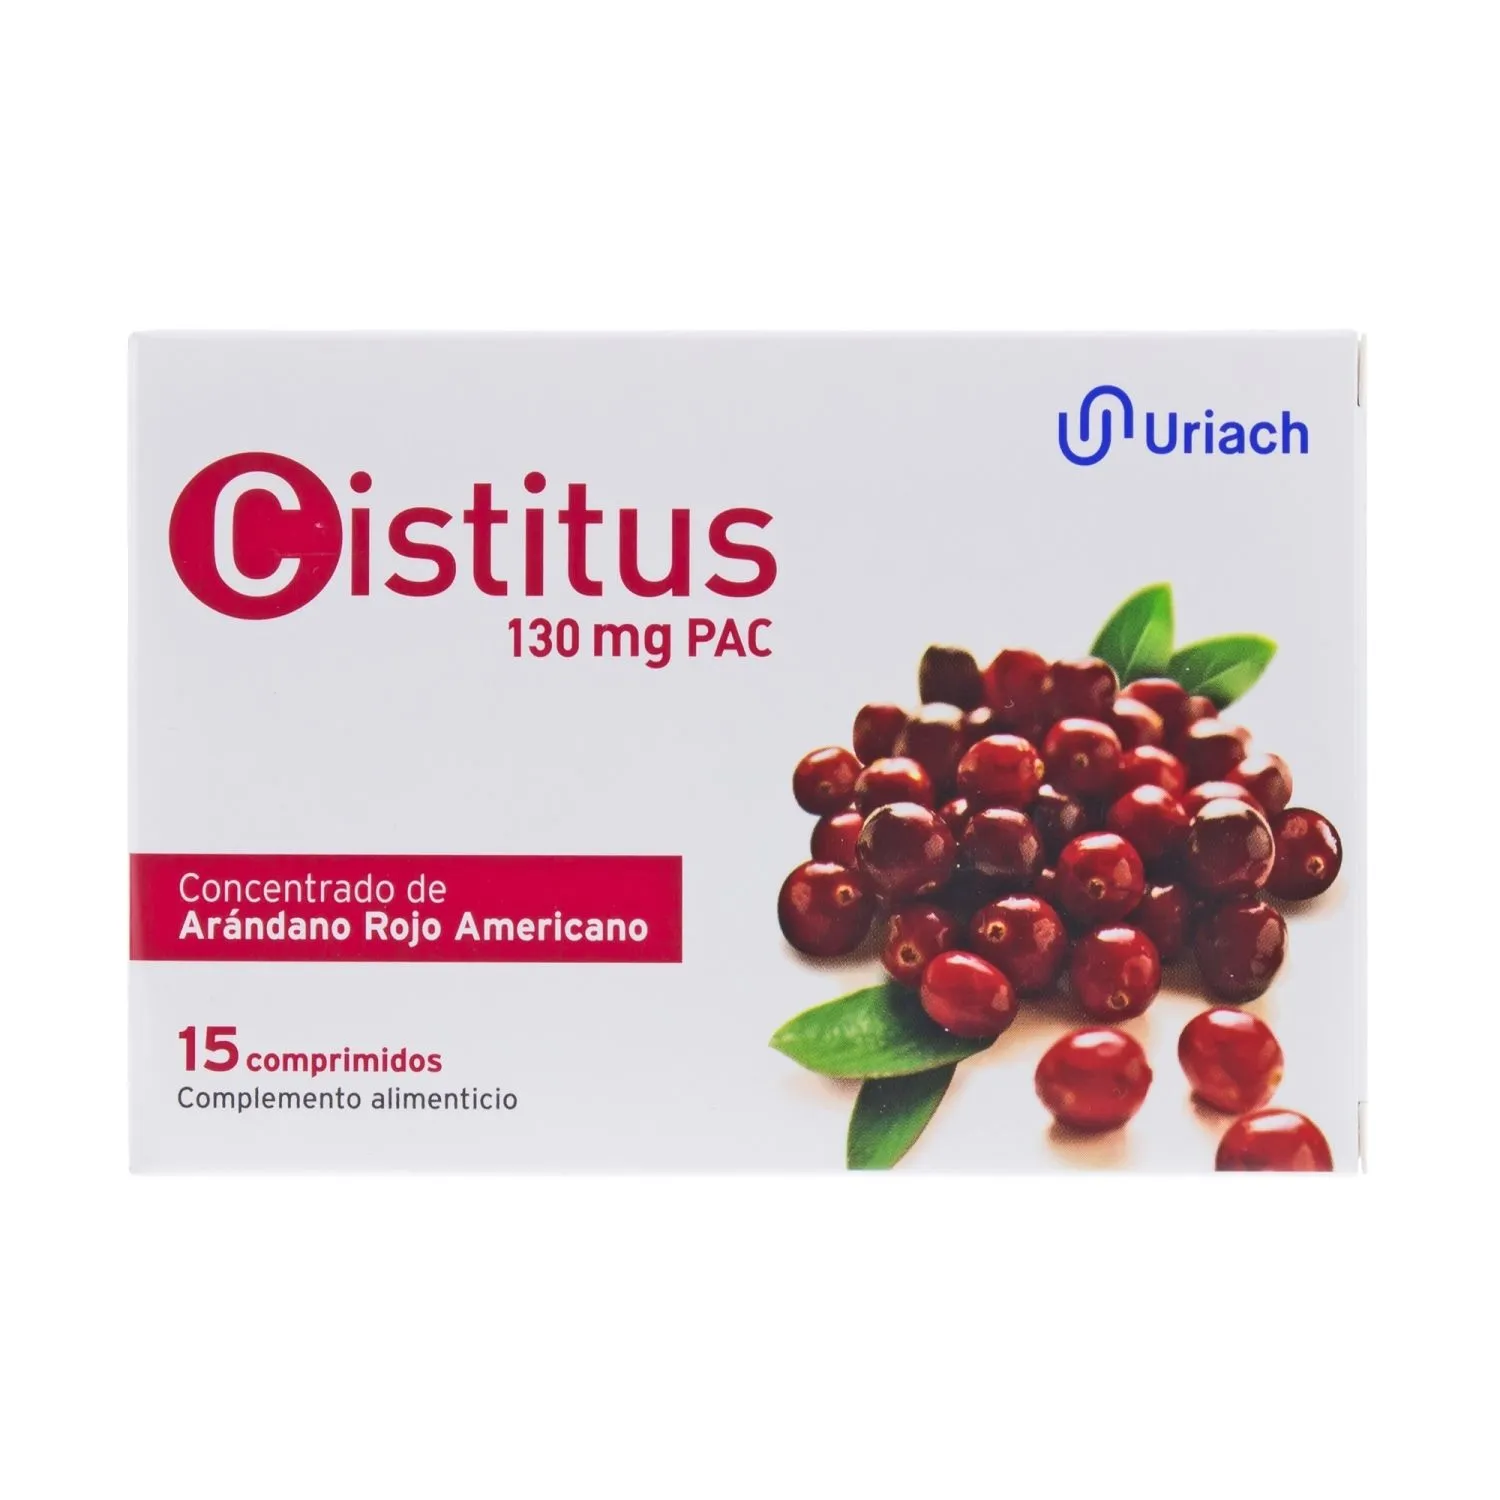 Cistitus 130 mg, 15 comprimate filmate, Uriach